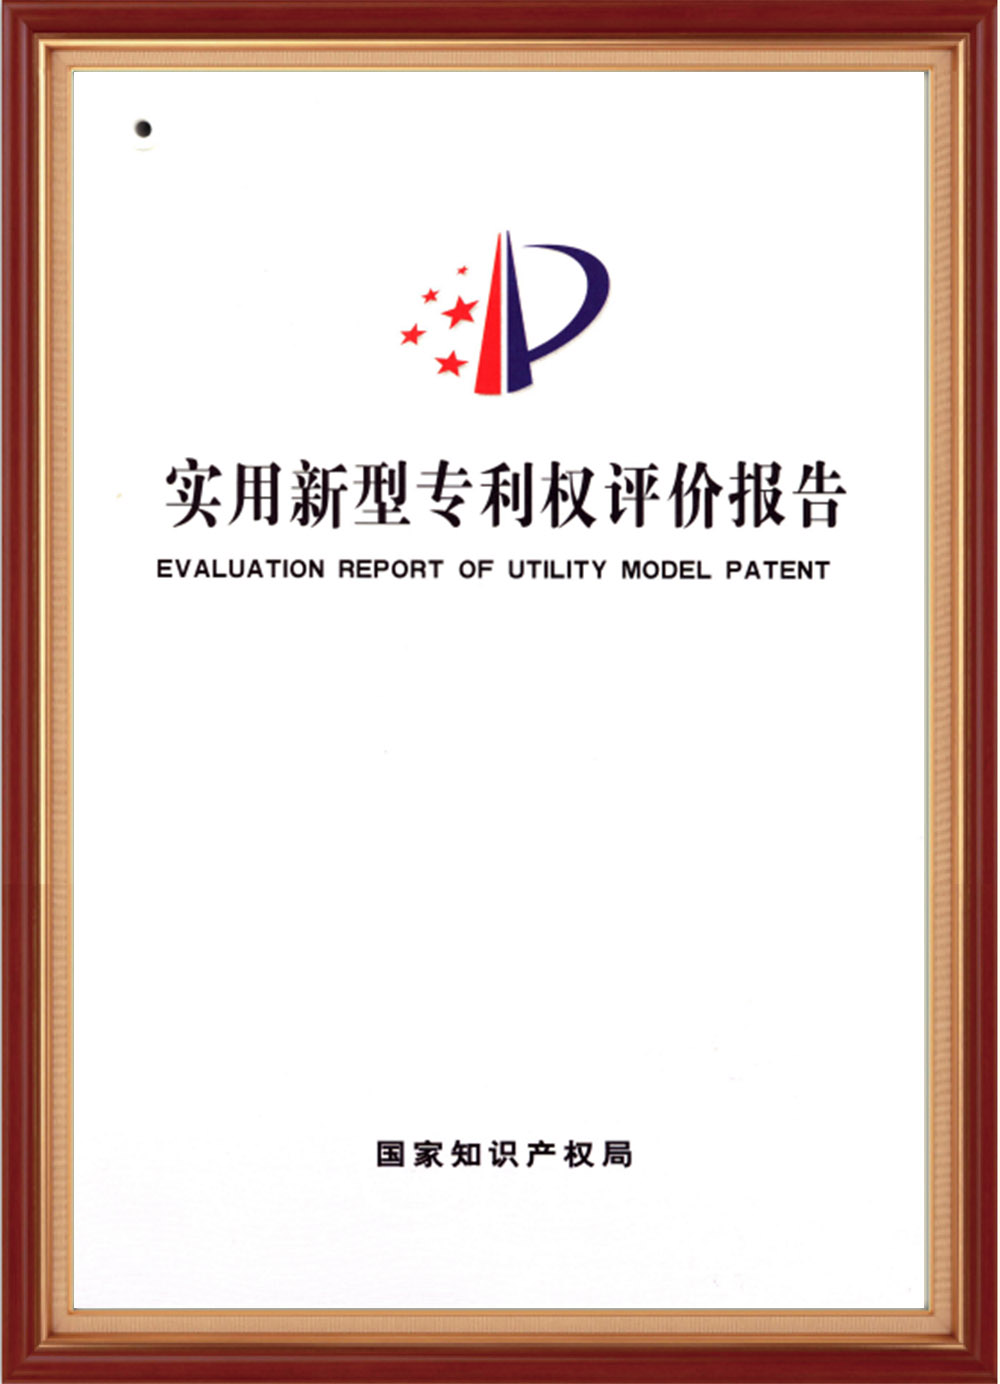 сертификат-01 (9)